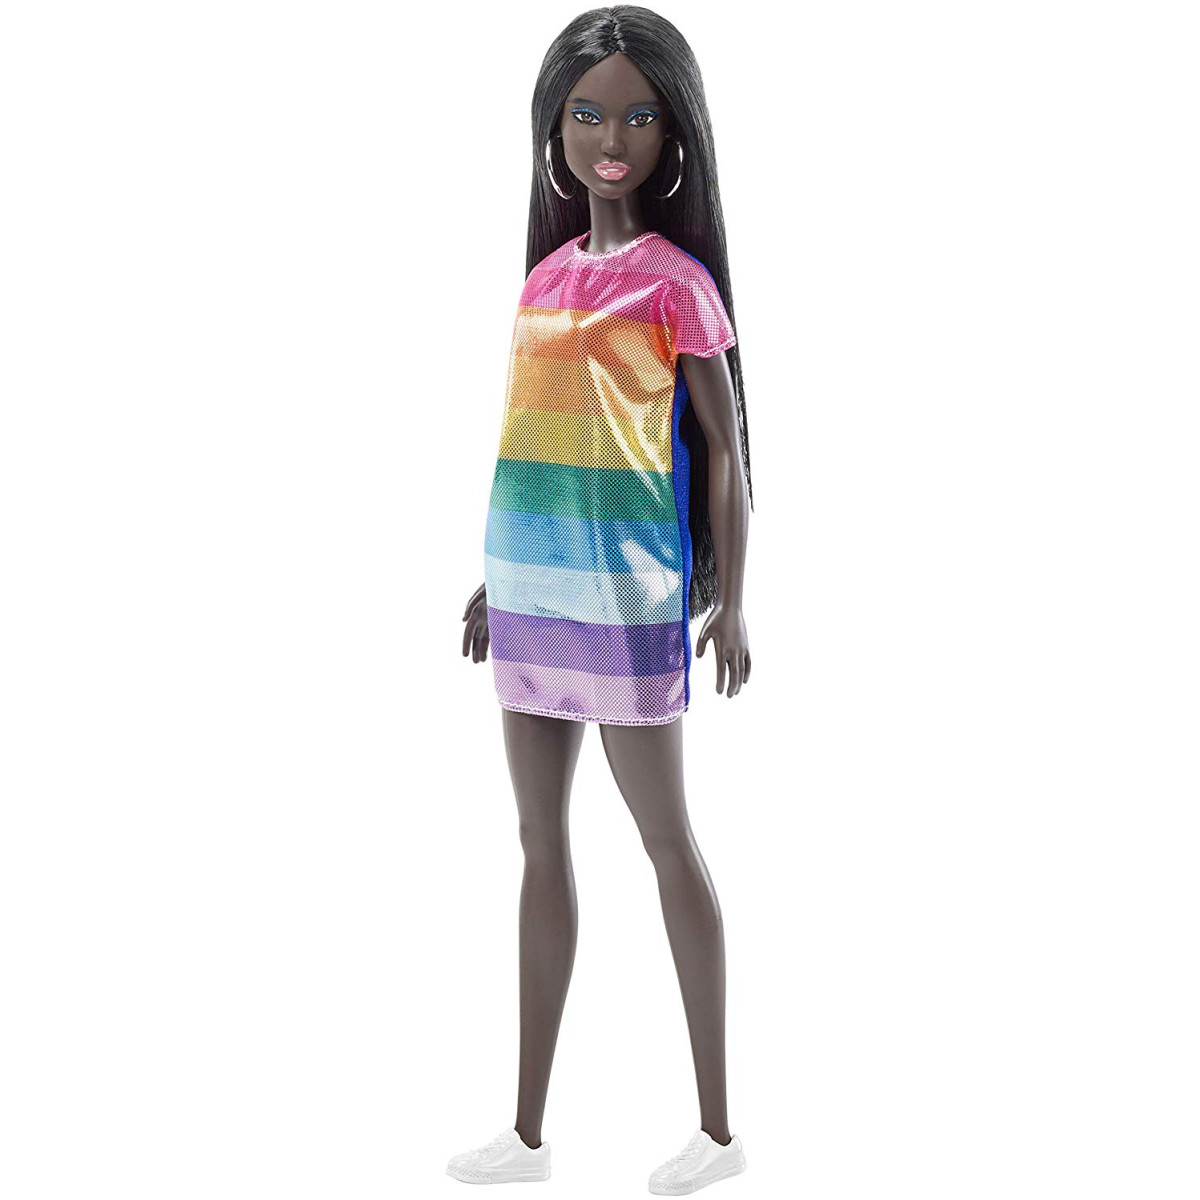 rainbow sparkle barbie